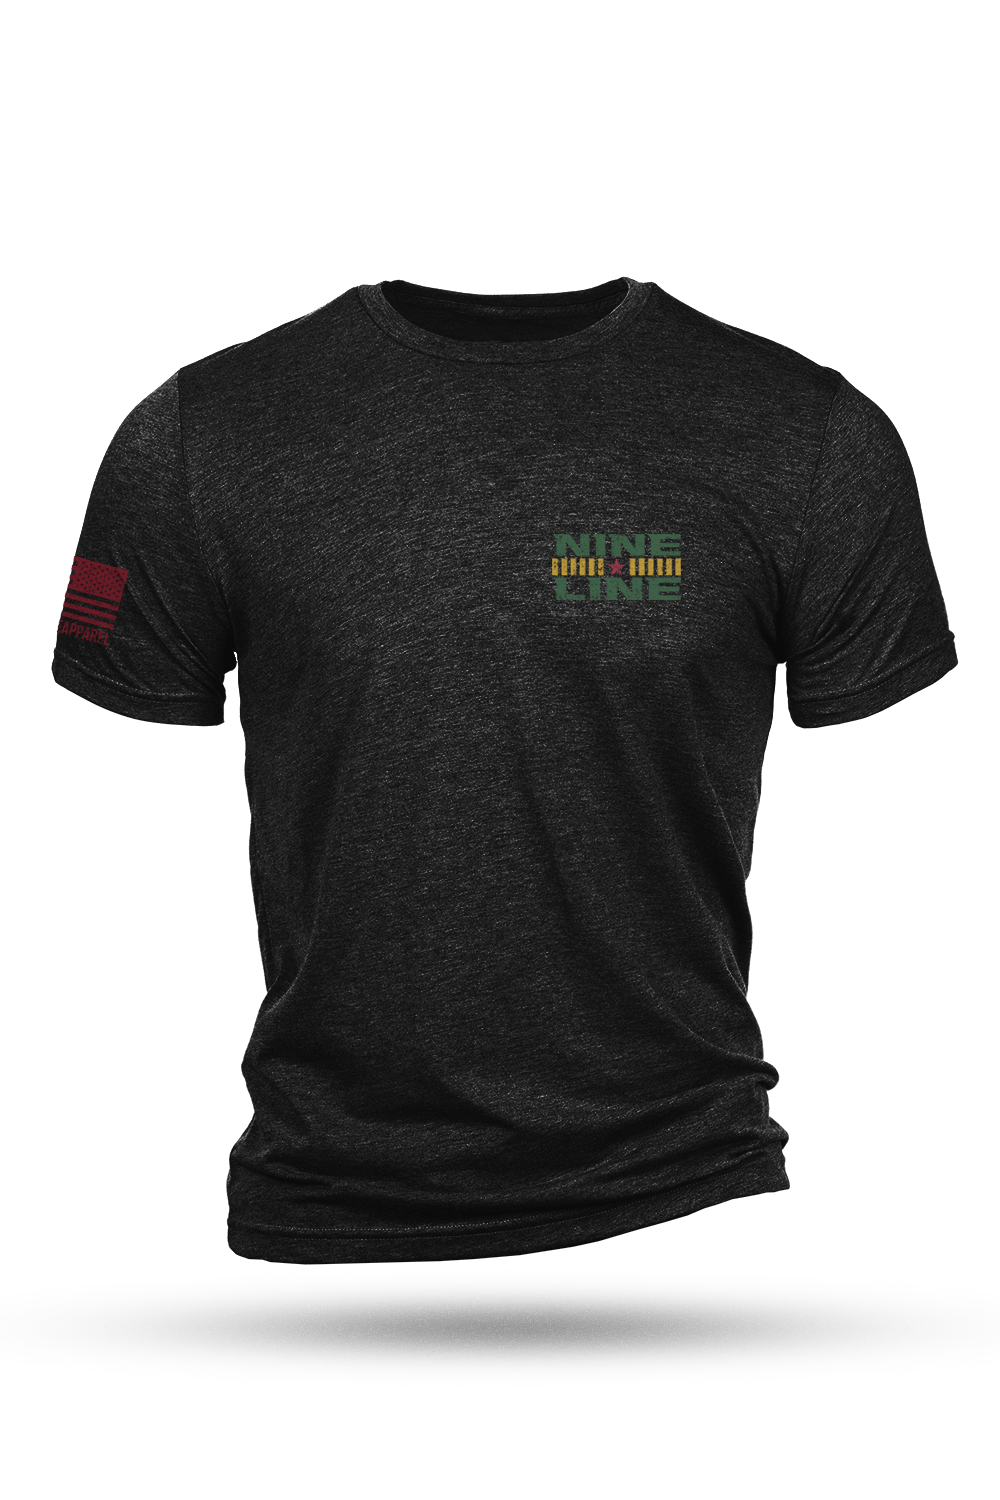 T-Shirt - Speak Freely - Nine Line Apparel